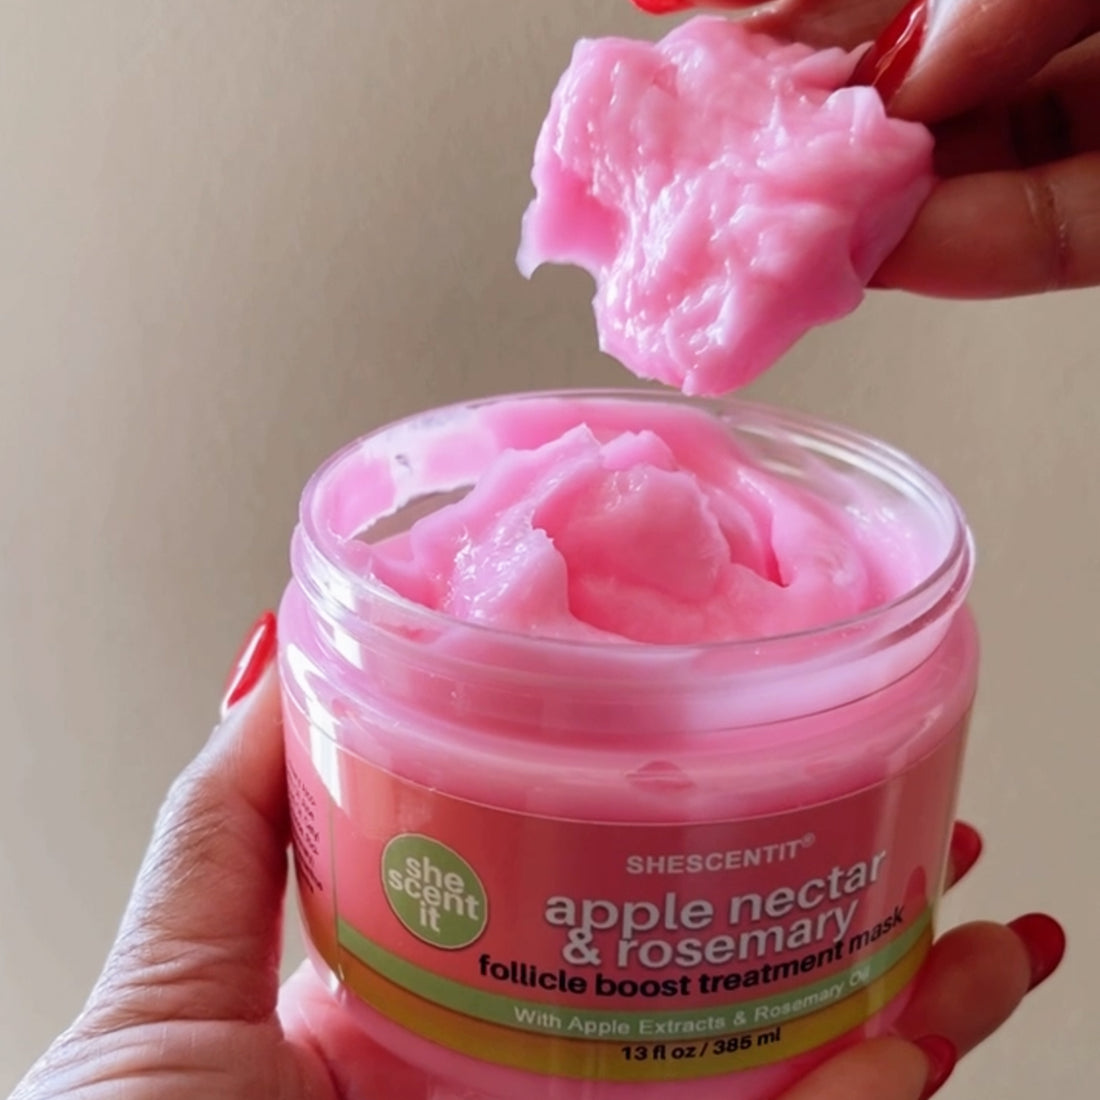 Apple Nectar &amp; Rosemary Follicle Boost Treatment Mask